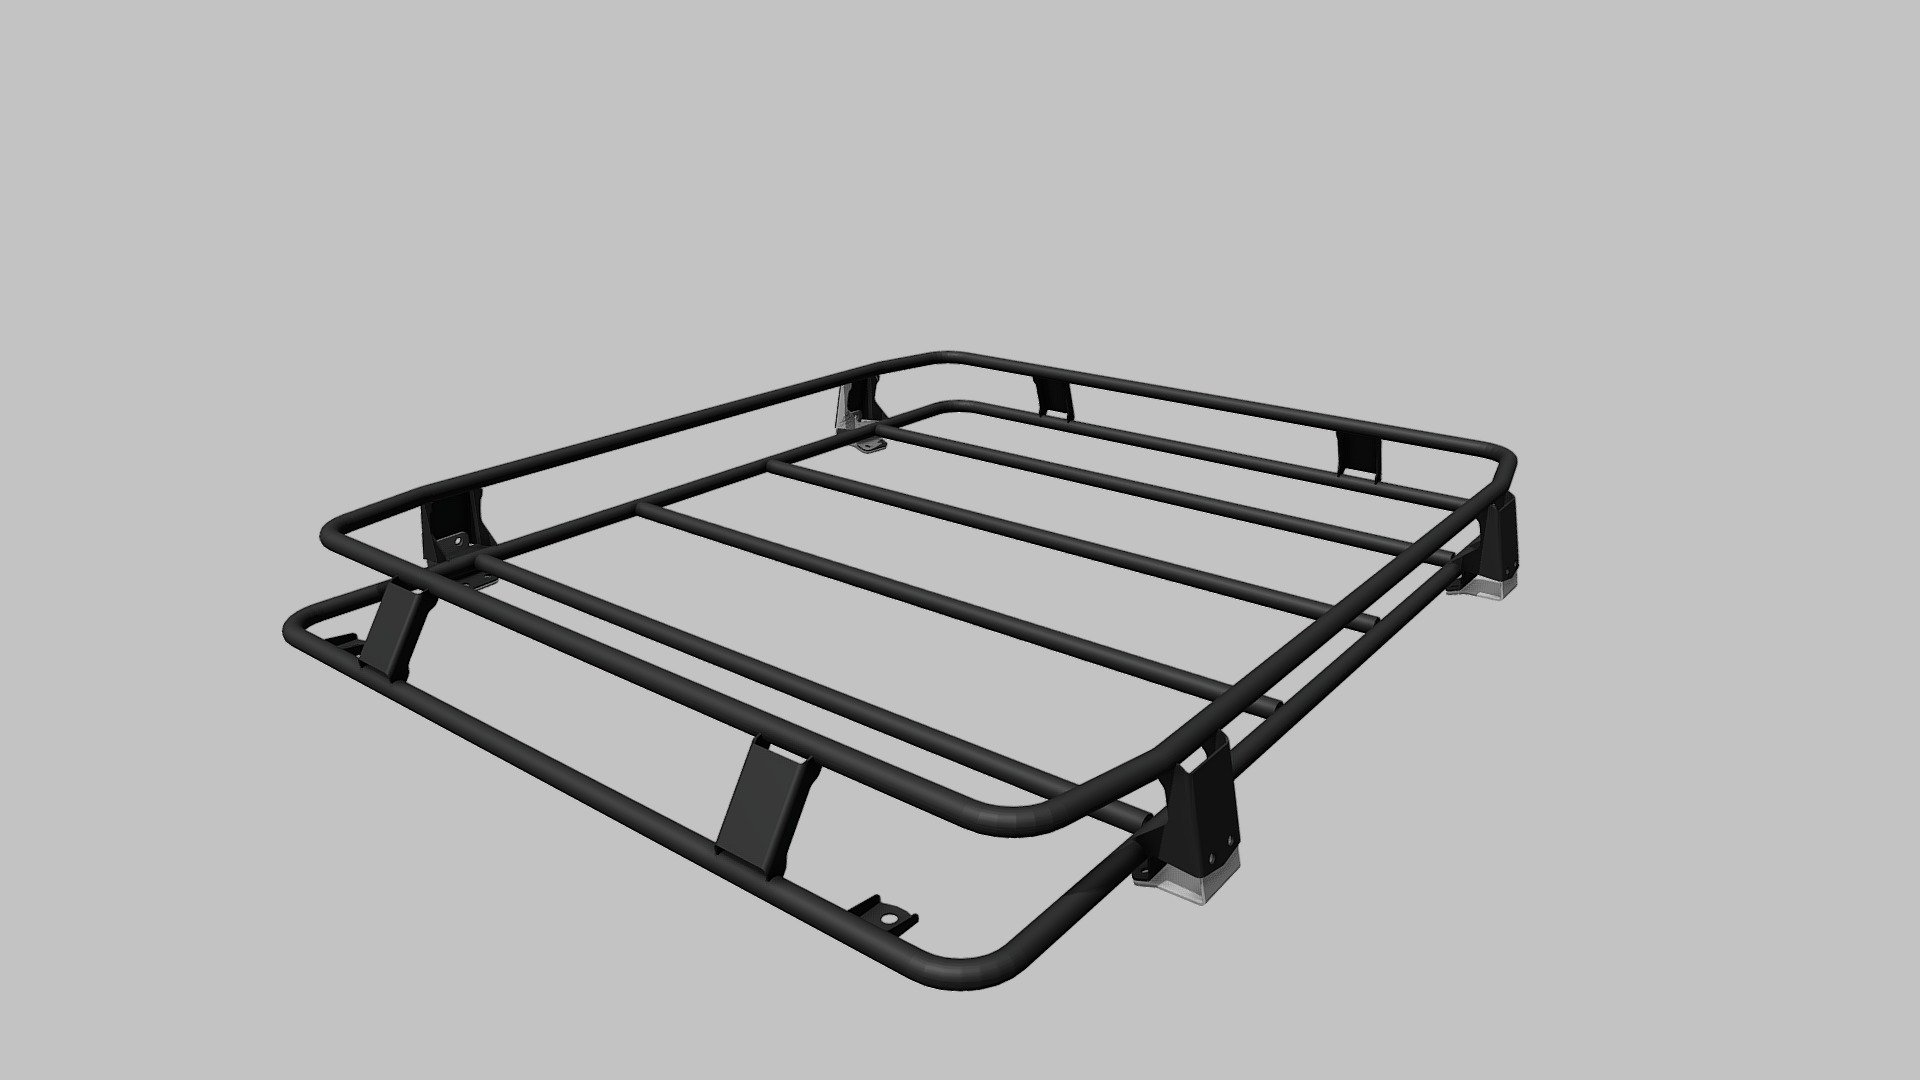 http://f-design.ru/products/bagazhnik-ekspeditsionnyj-rys-lada-4x4- - Roof rack Lada4x4 Rys - 3D model by F-DESIGN (@vsolin) 3d model